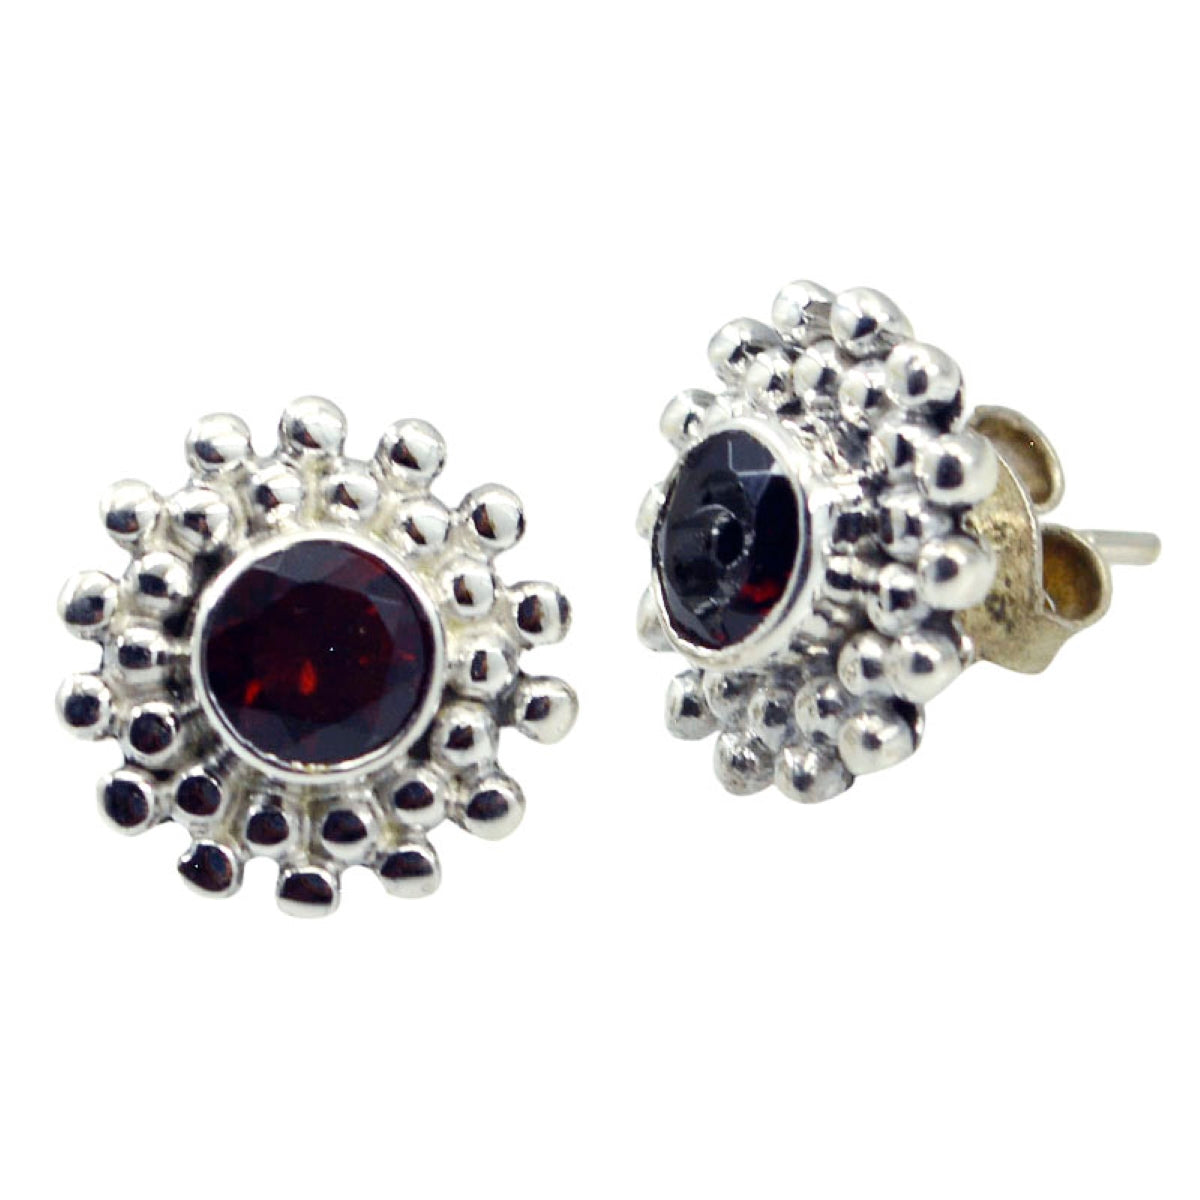 Riyo Genuine Gems round Faceted Red Garnet Silver Earring gift for brithday